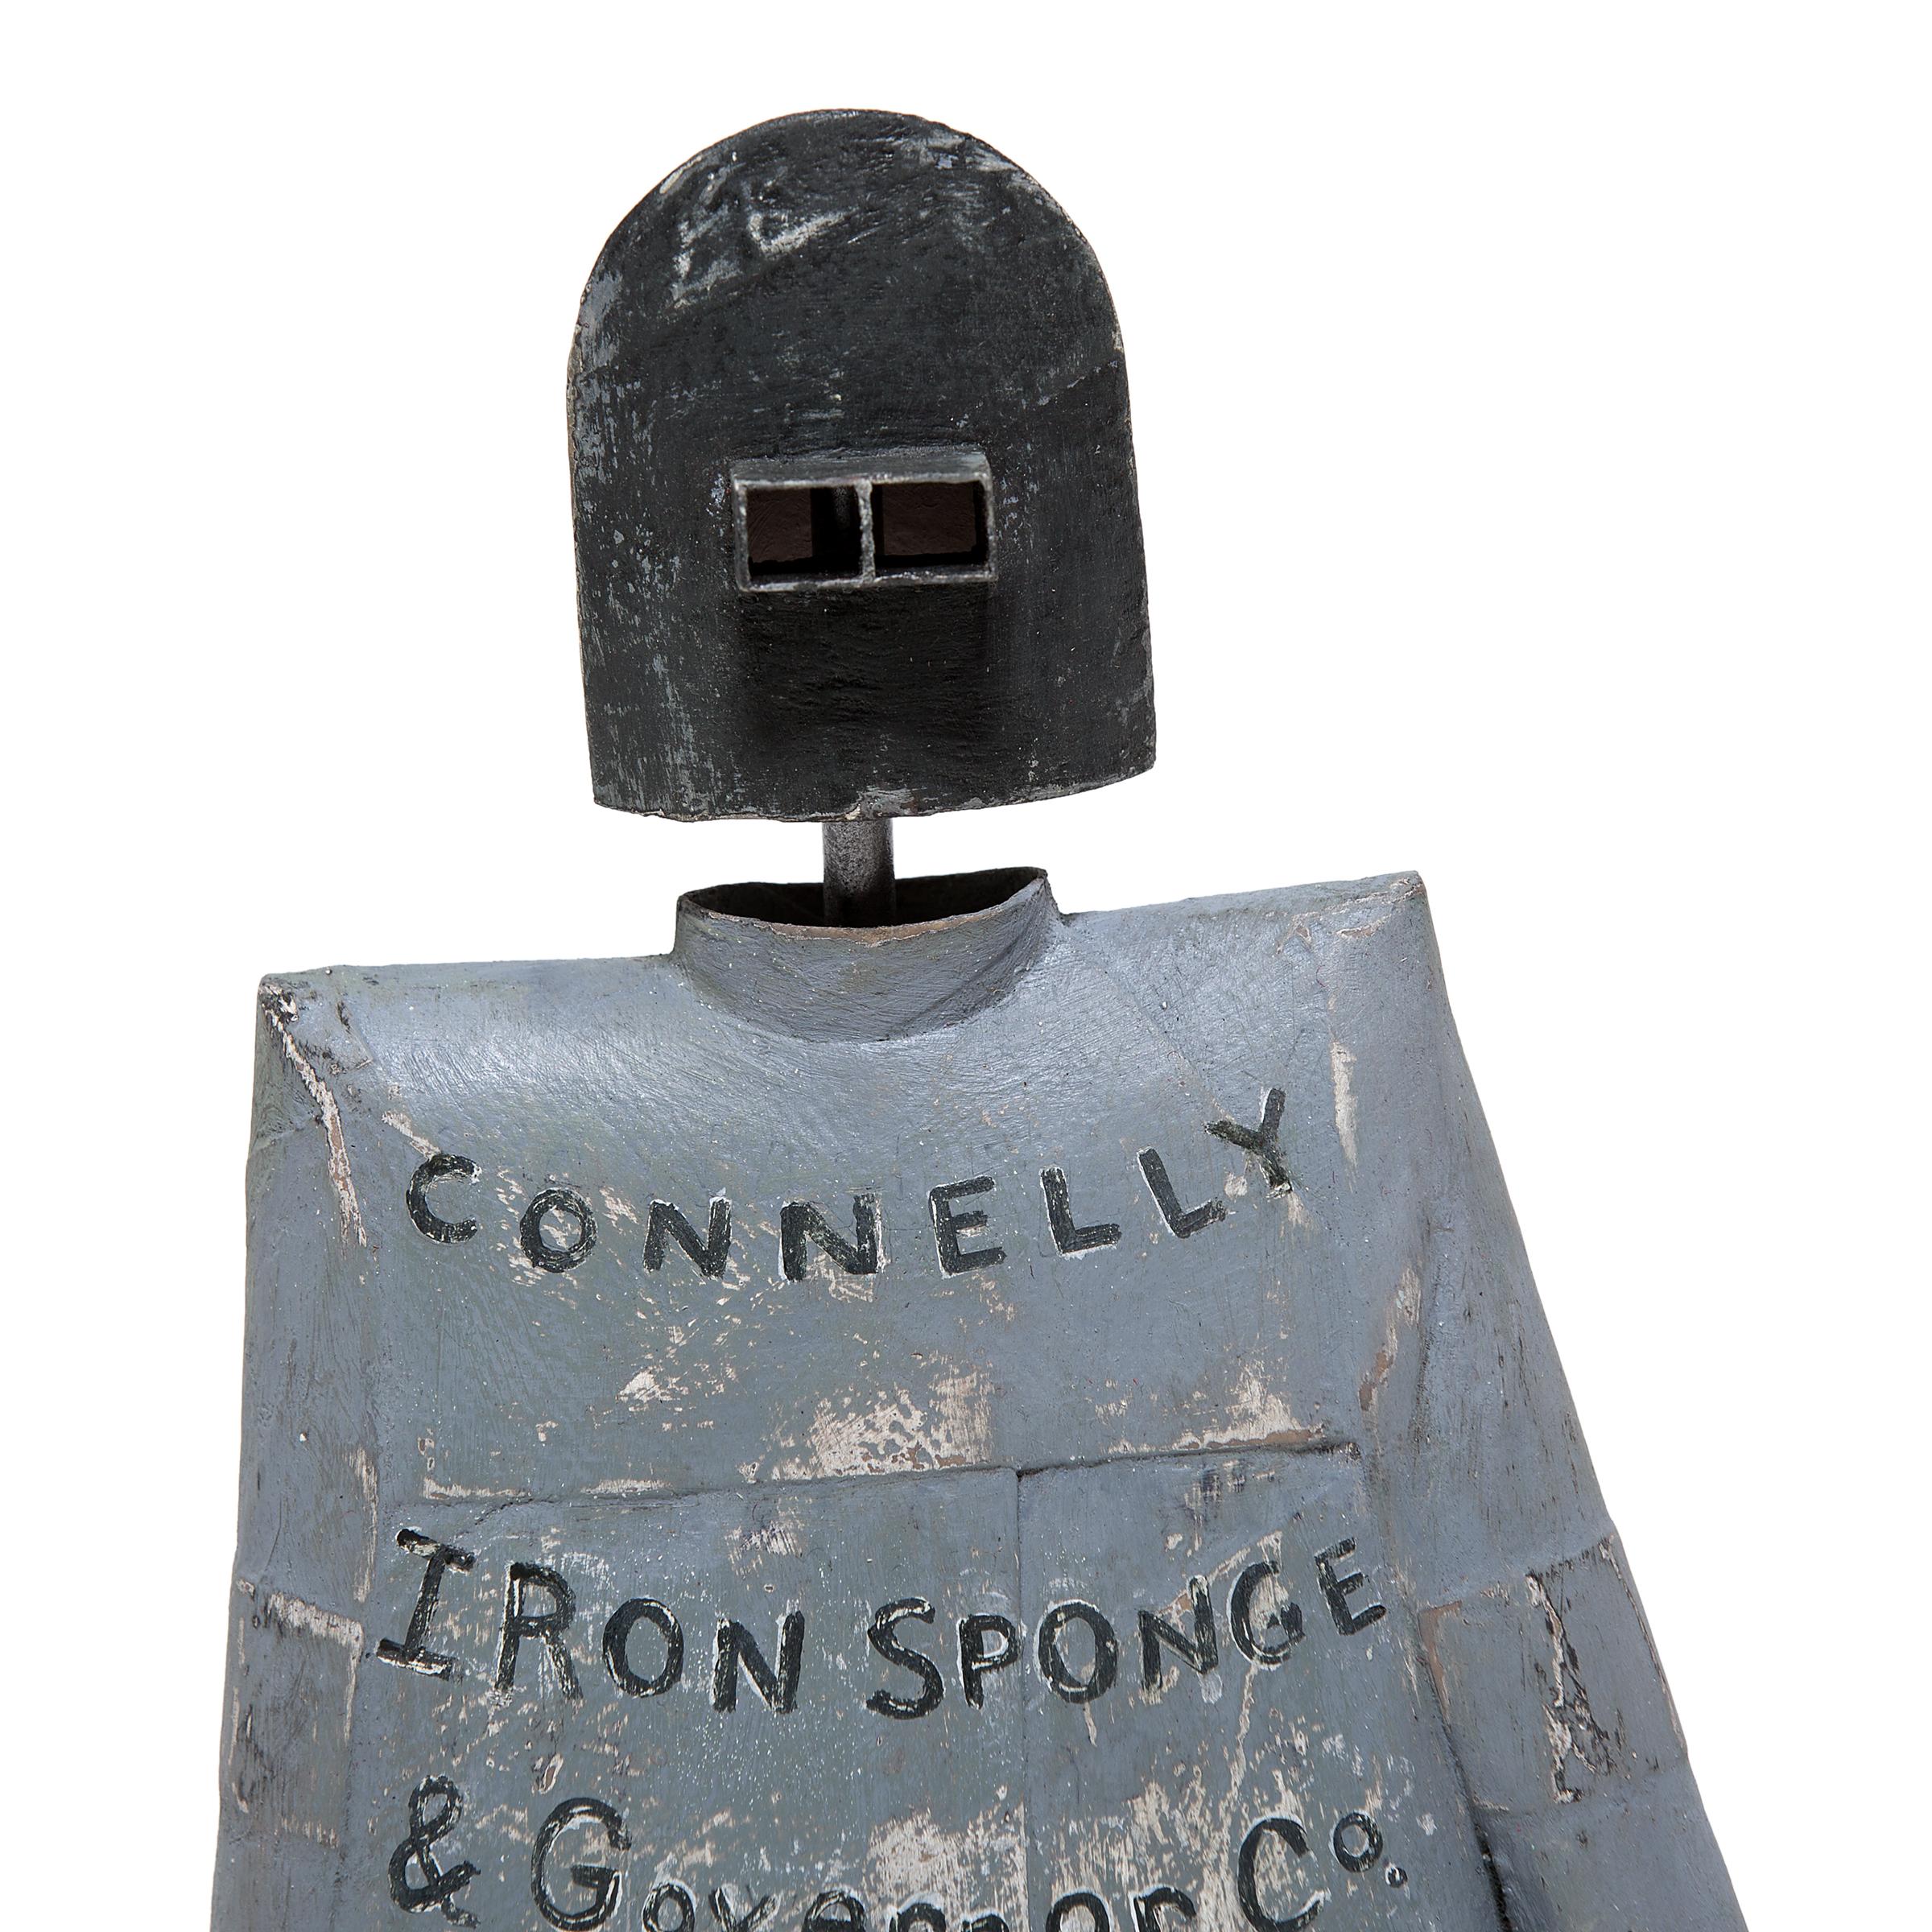 Iron Sponge - Brown Still-Life Sculpture by Patrick Fitzgerald